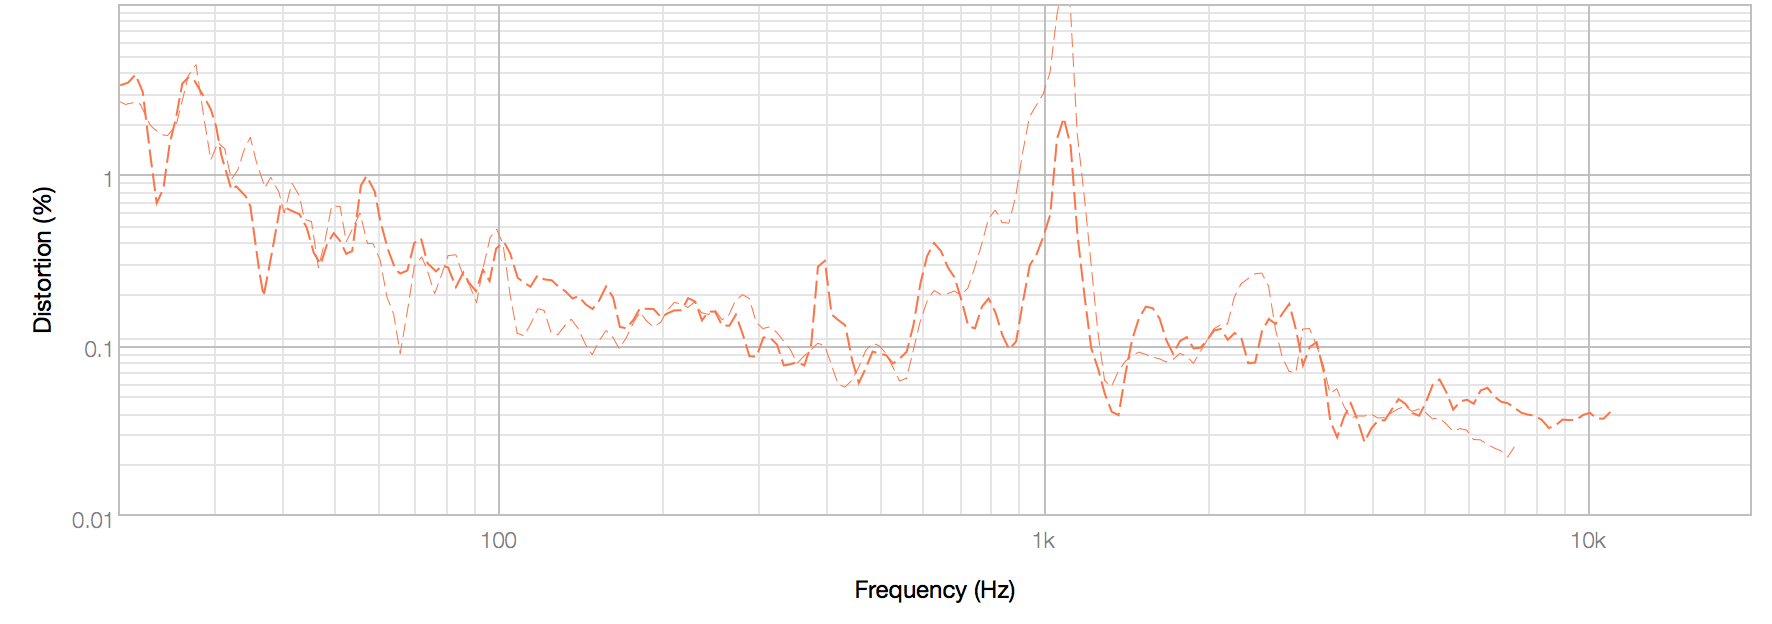 HA-3 Harmonic Distortion Percentage